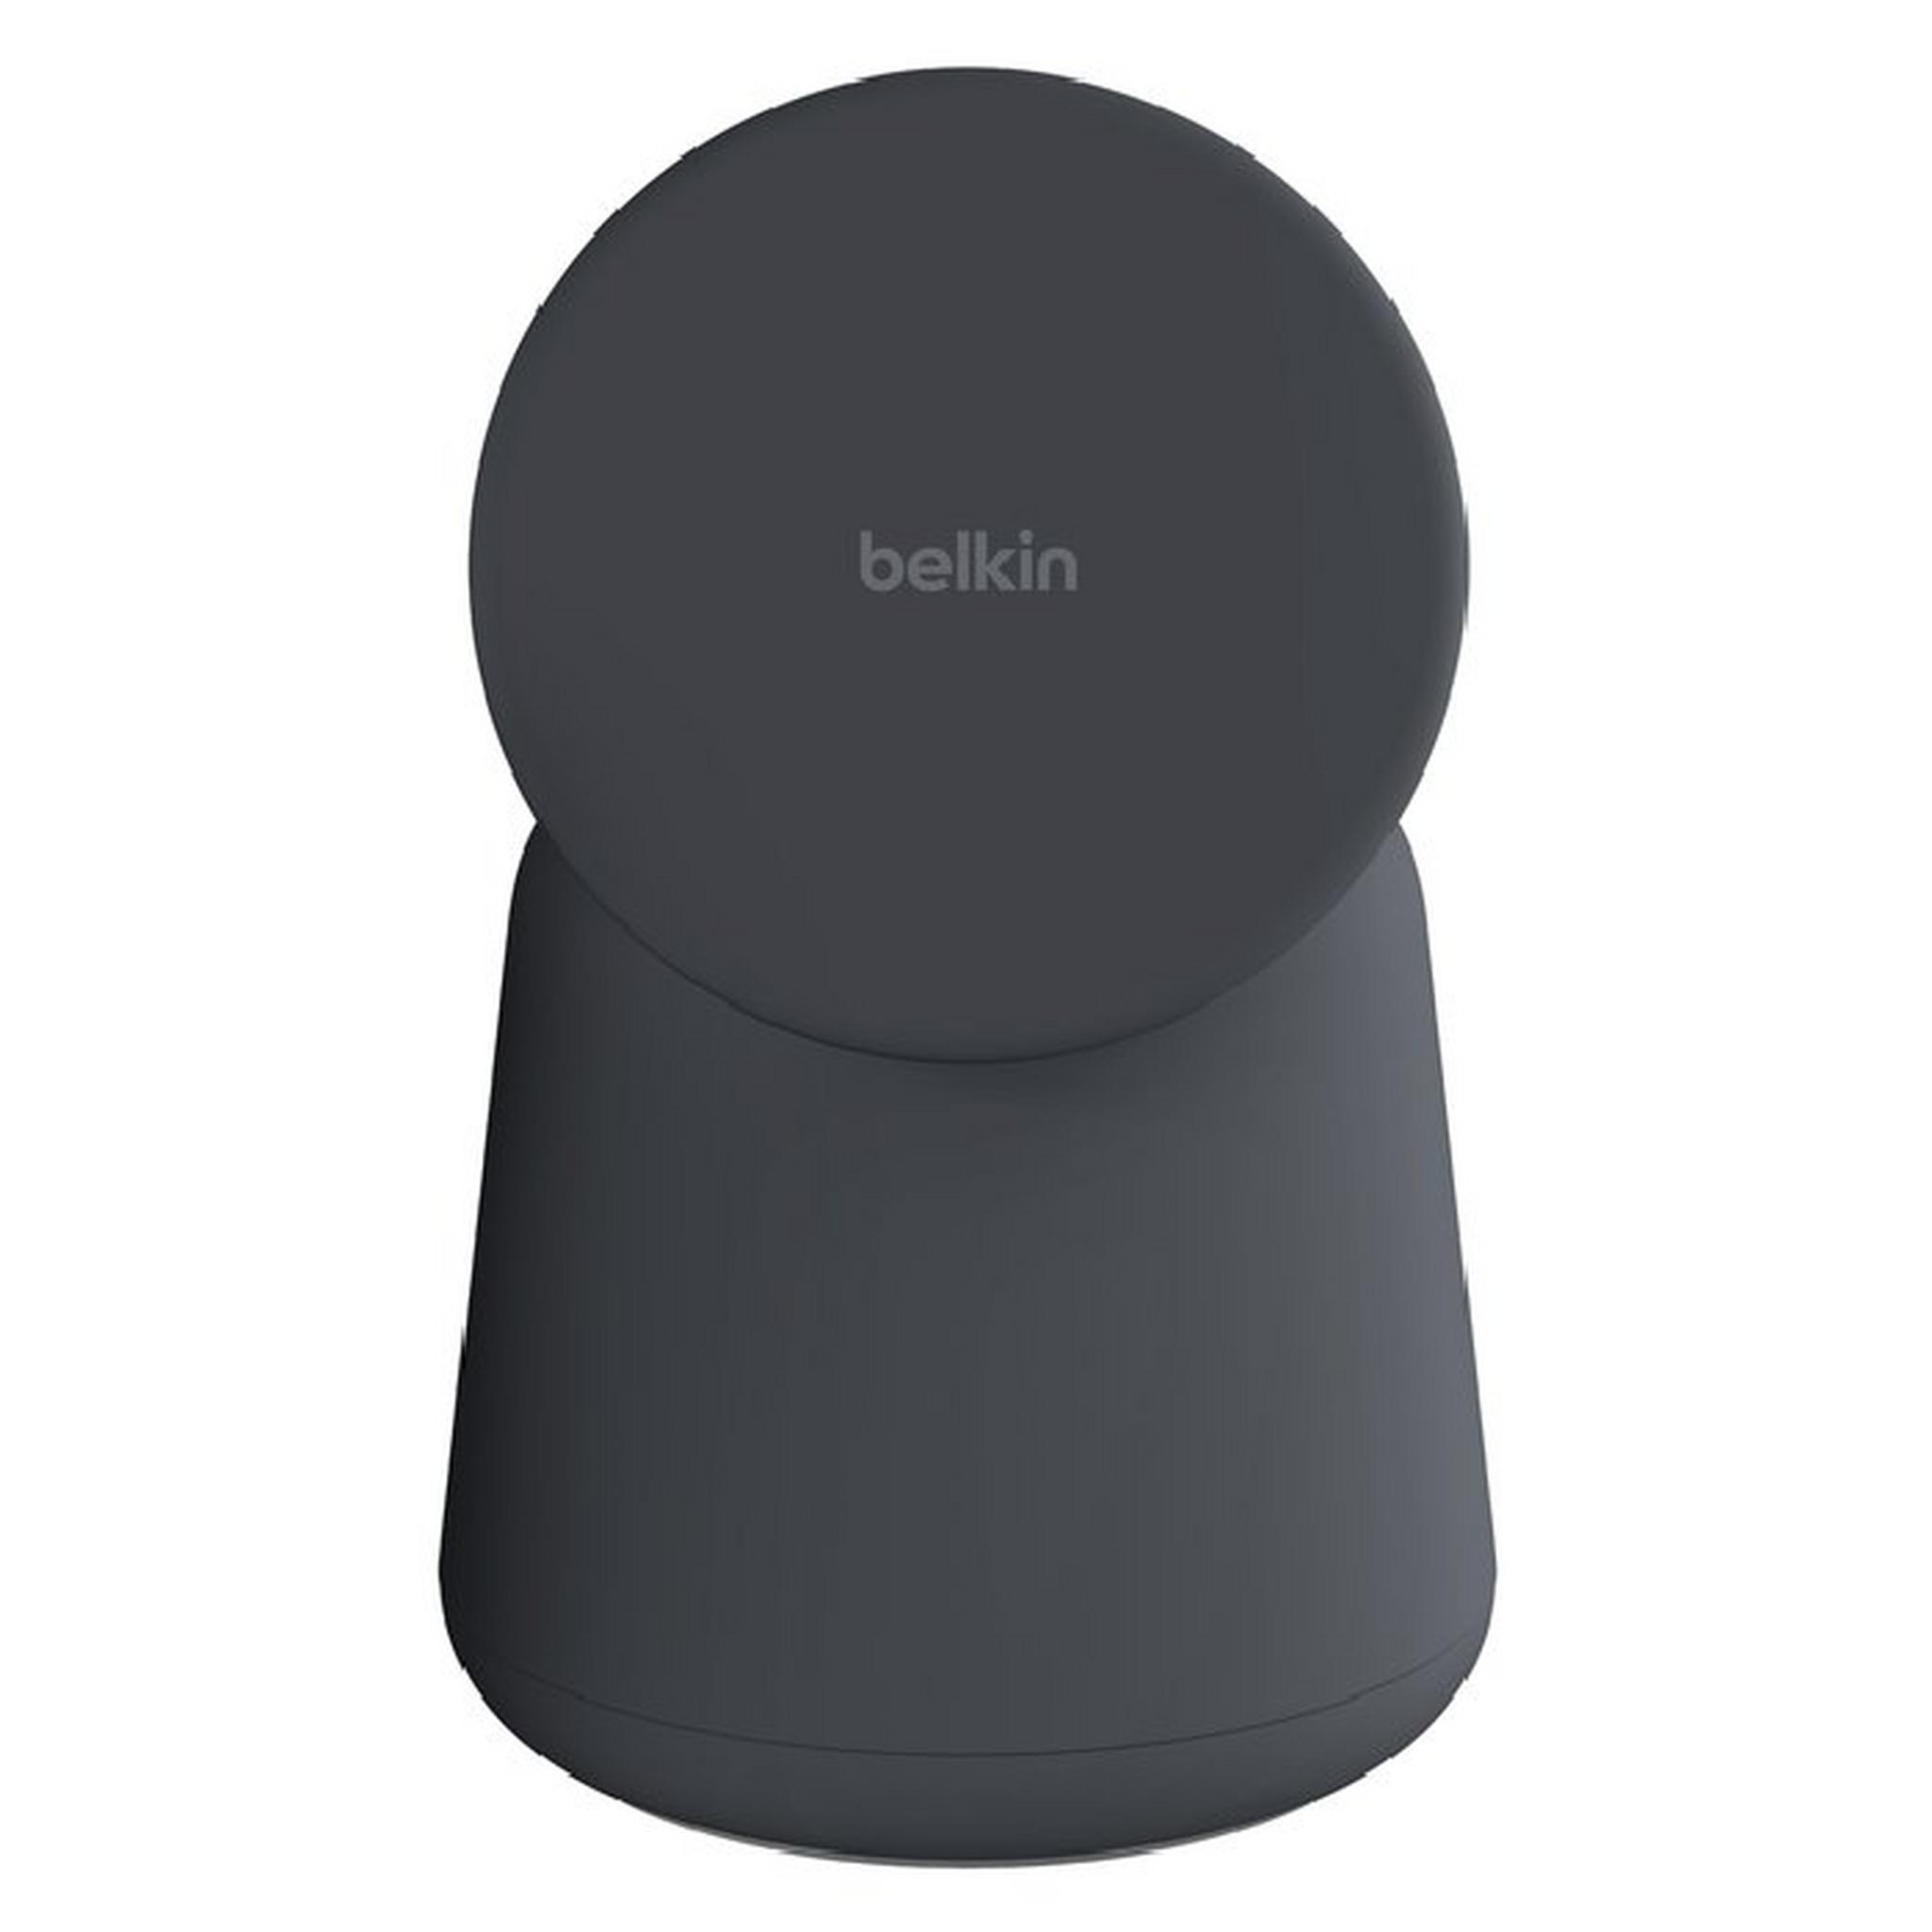 Belkin 2-in-1 Wireless Charging Pro Dock with MagSafe, 15W, WIZ020MYH36 – Black